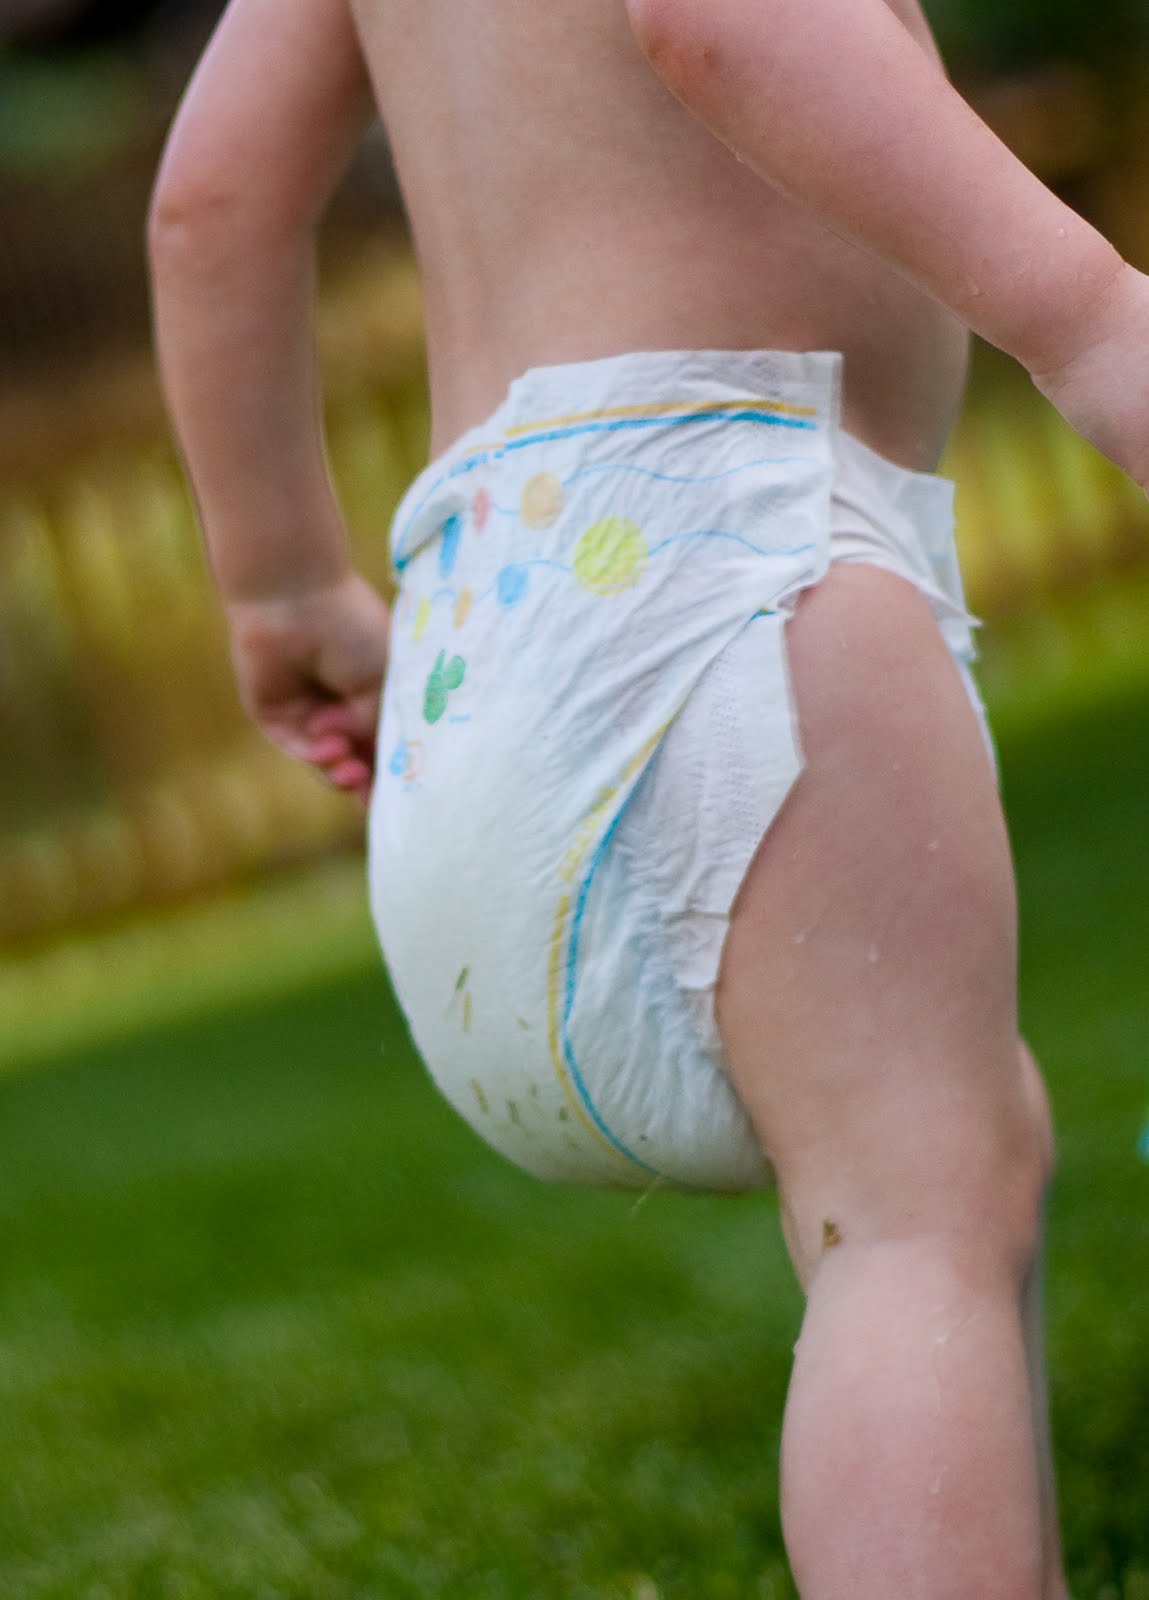 soaked diaper